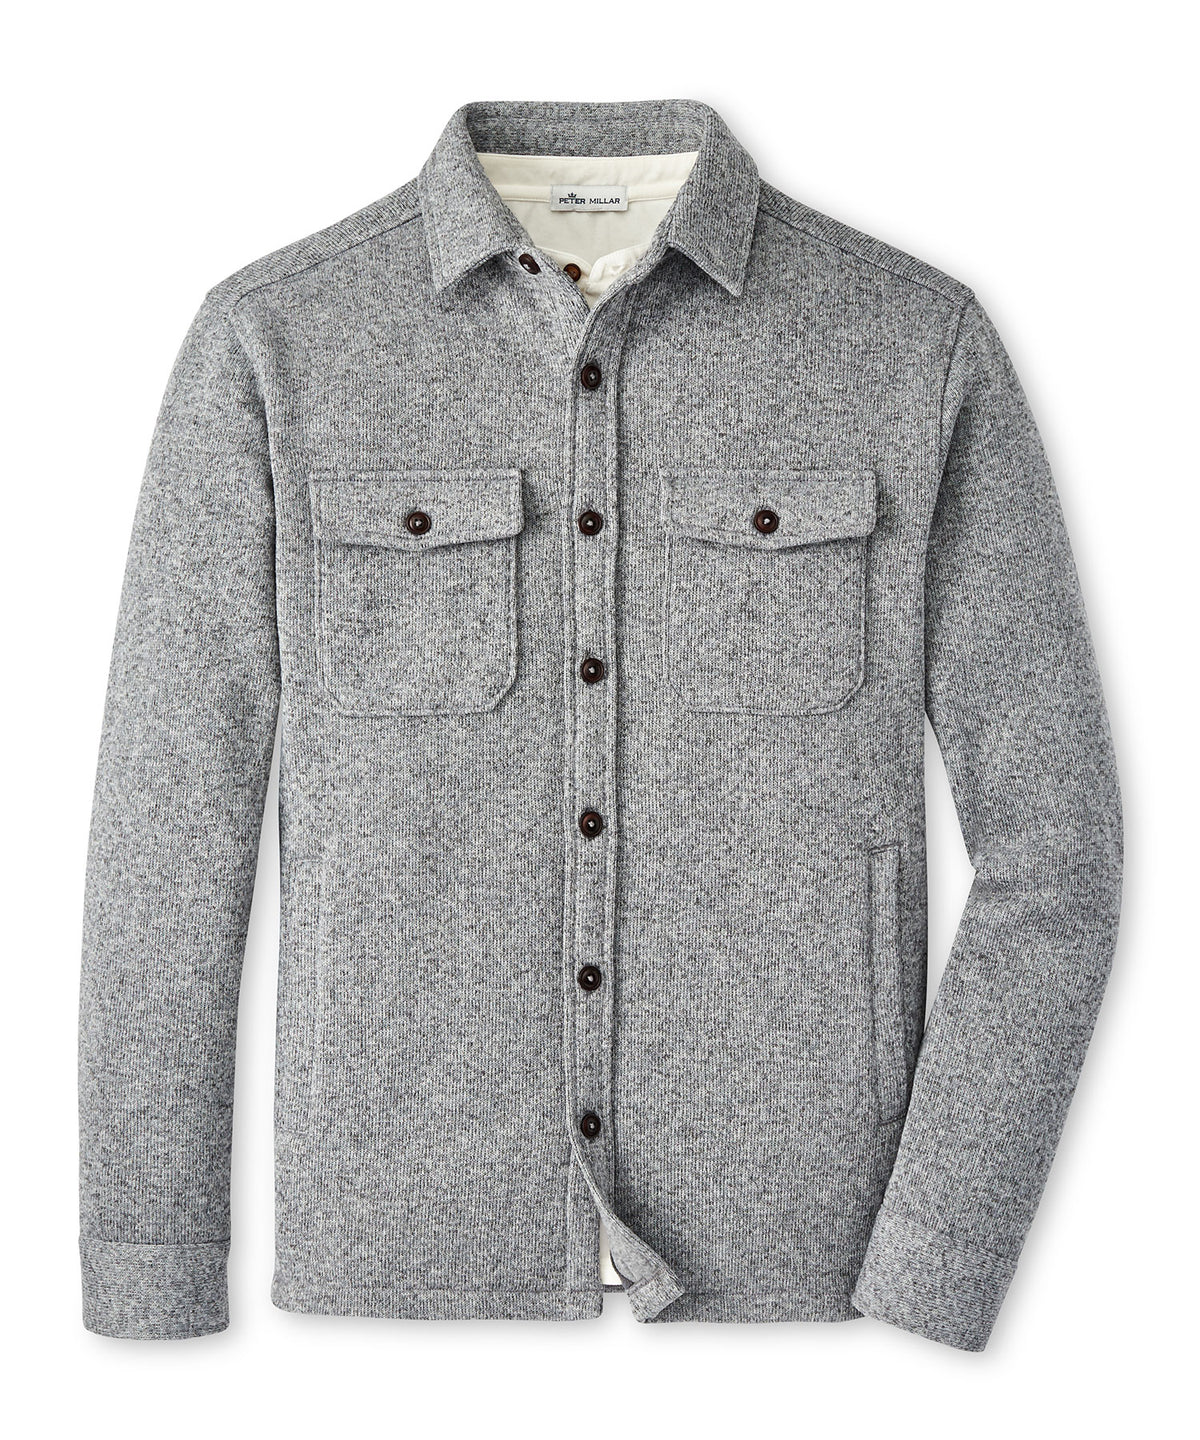 Peter Millar Sweater Fleece Shirt Jacket, Men's Big & Tall